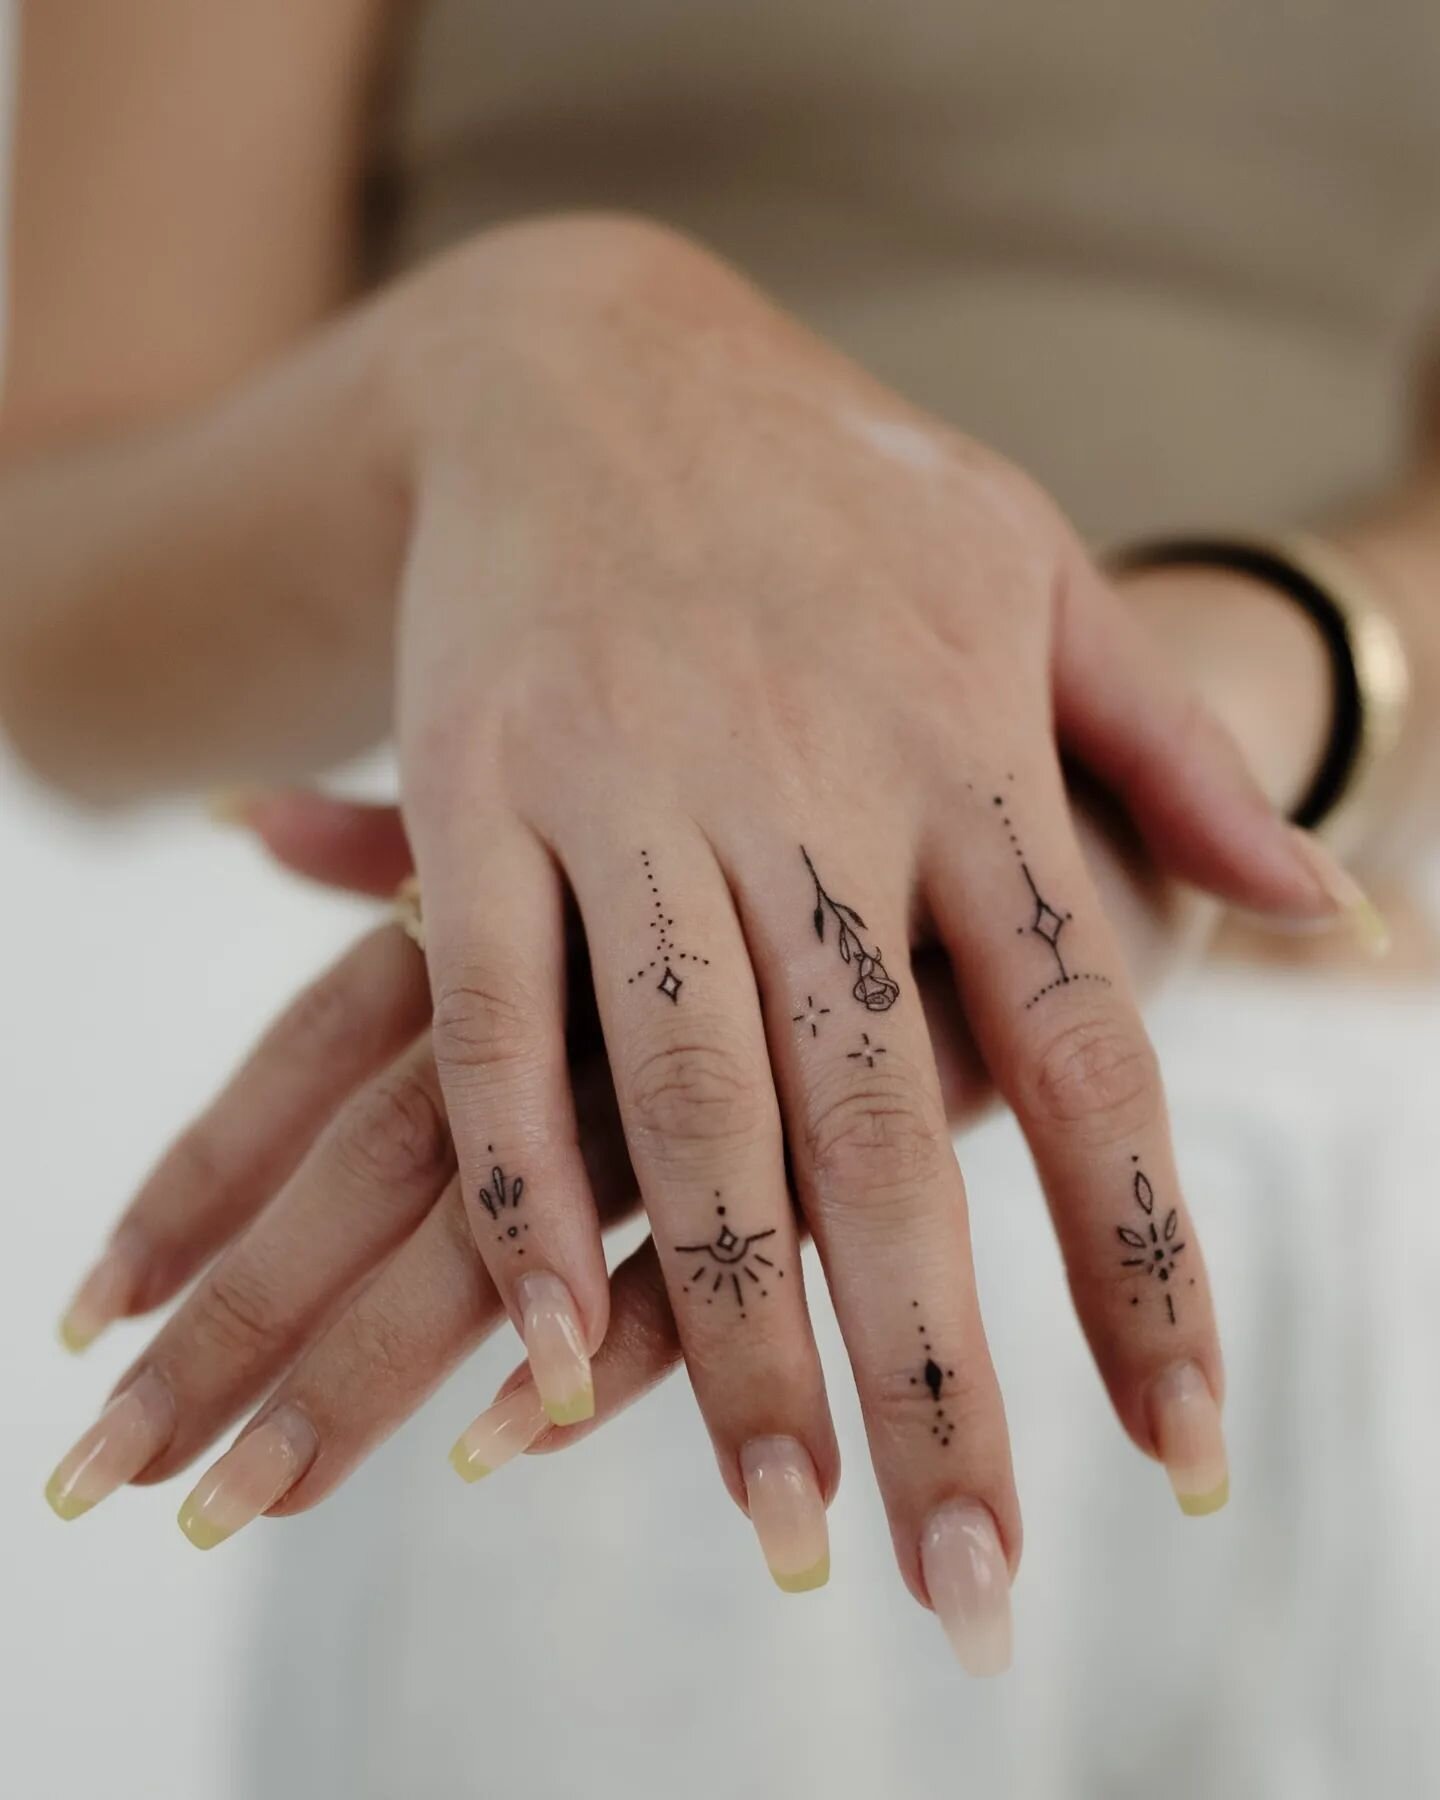 Hands *booking form in bio*
.
.
.
.
.
.
.
.
#tattoo #tattoos #ink #inked #art #tattooartist #tattooart #tattooed #tattoolife #tattooideas #love #artist #blackwork #instagood #tattoodesign #tatuagem #tattooing #tattooist #blackandgreytattoo #tattooink